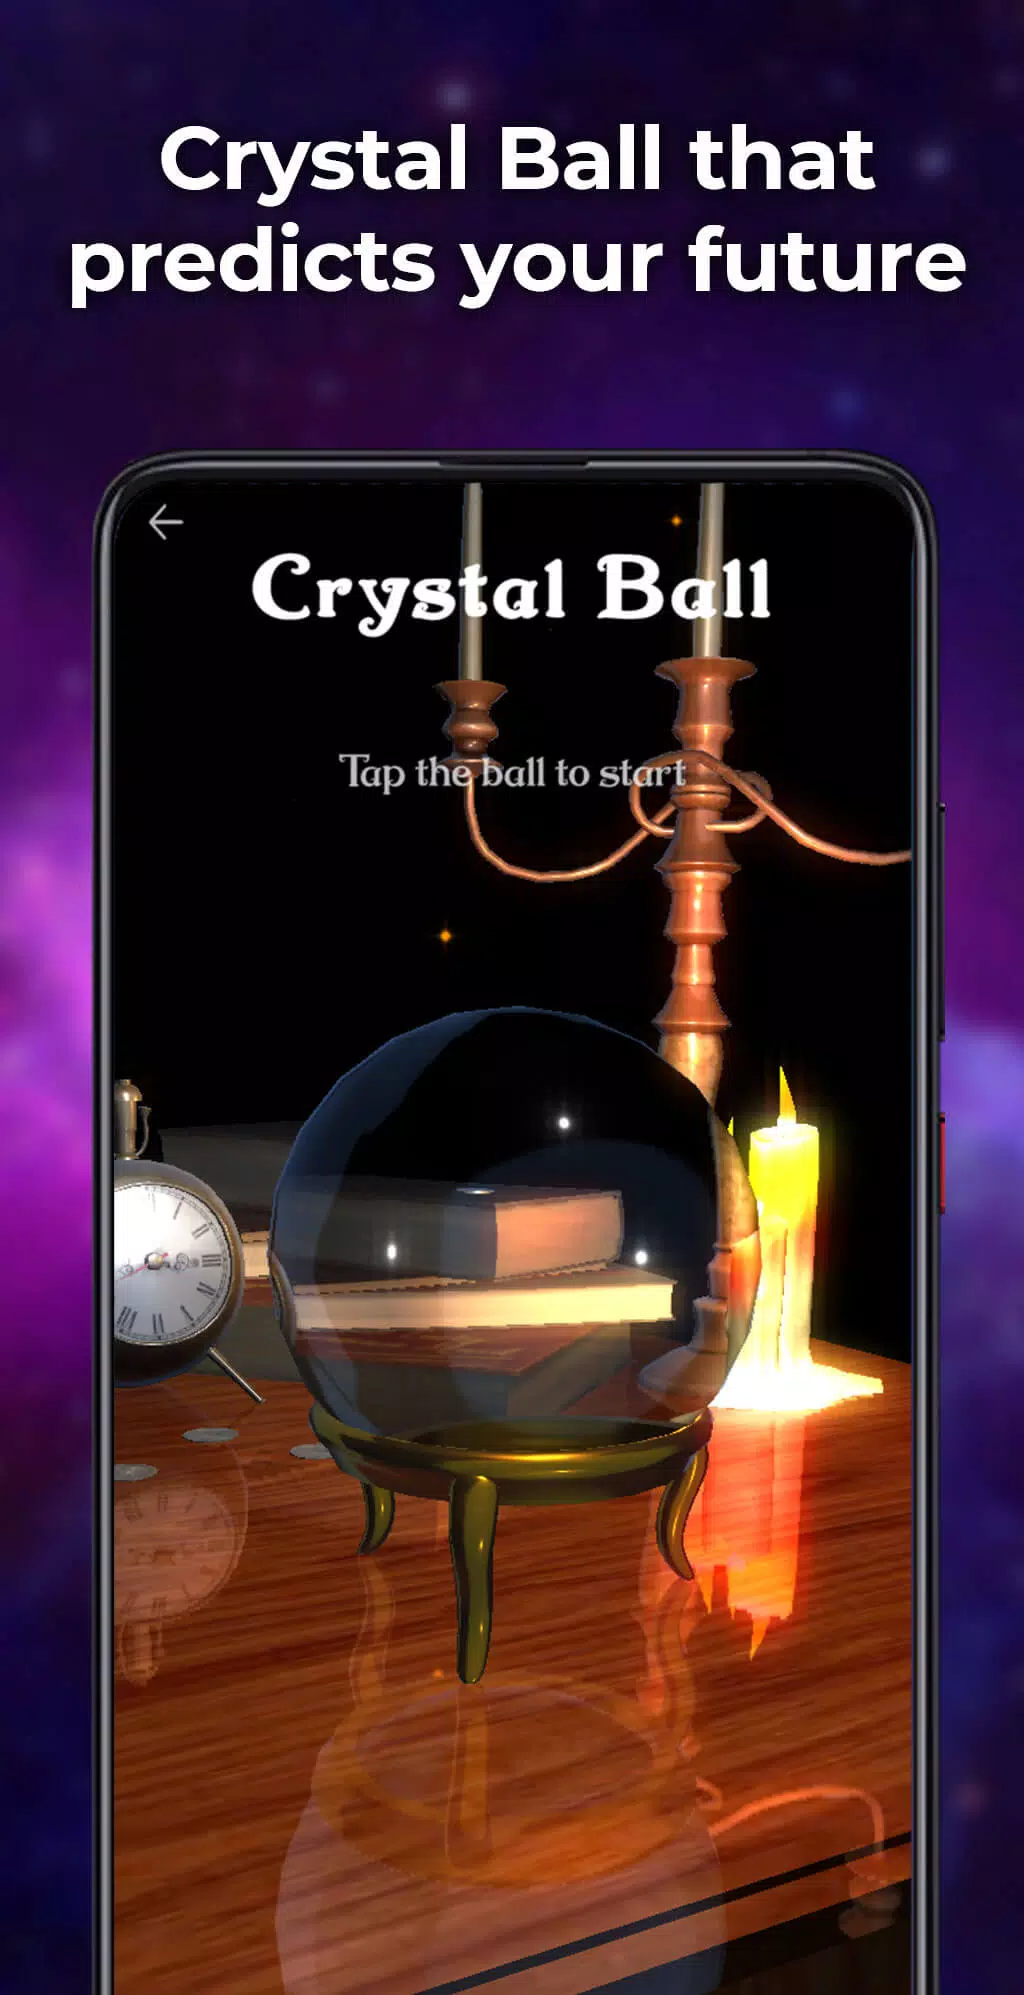 Download do APK de A Bola de Cristal Mágica para Android